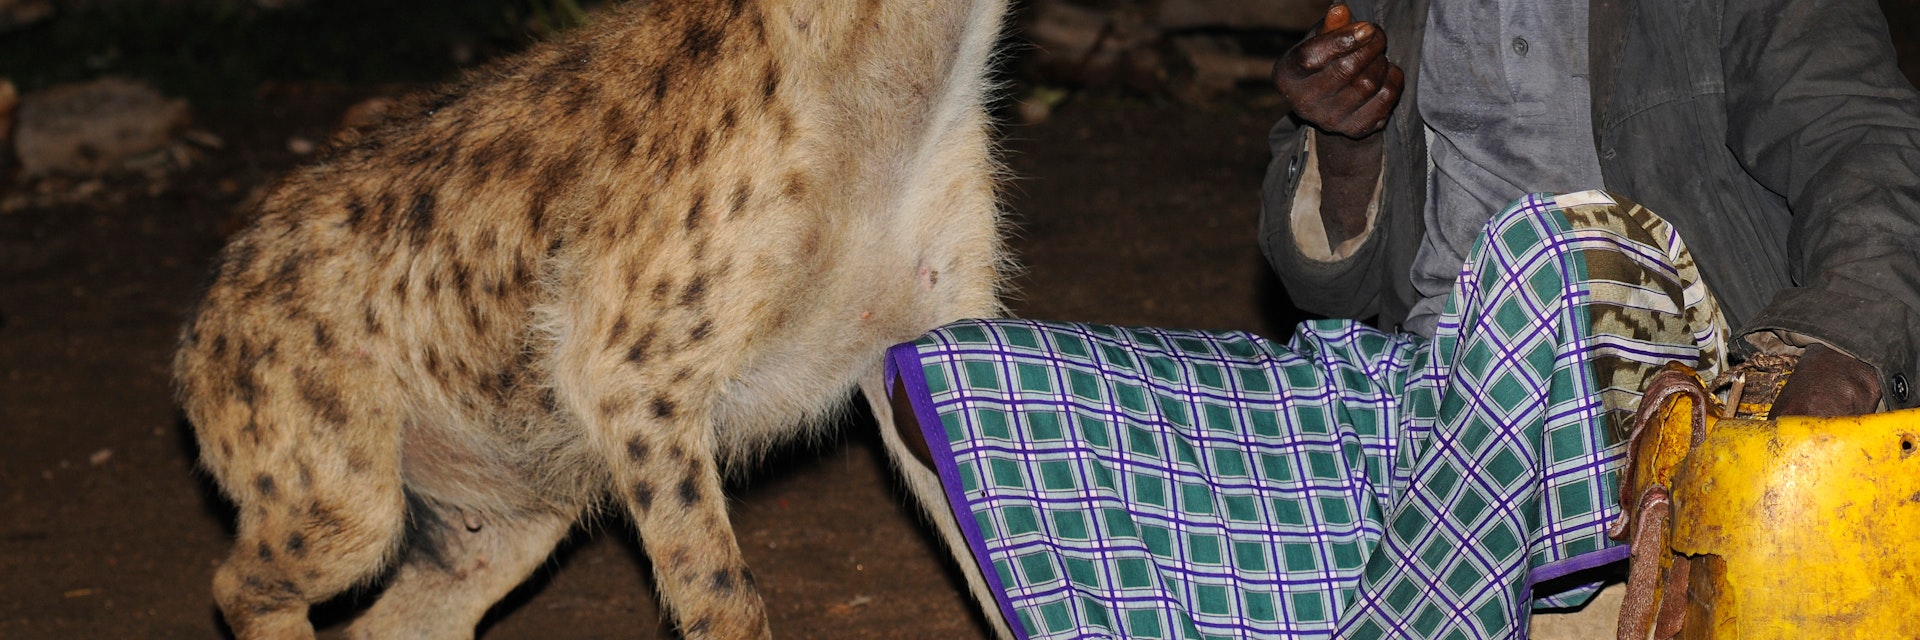 Hyena-man of Harar feeding a spotted hyena.